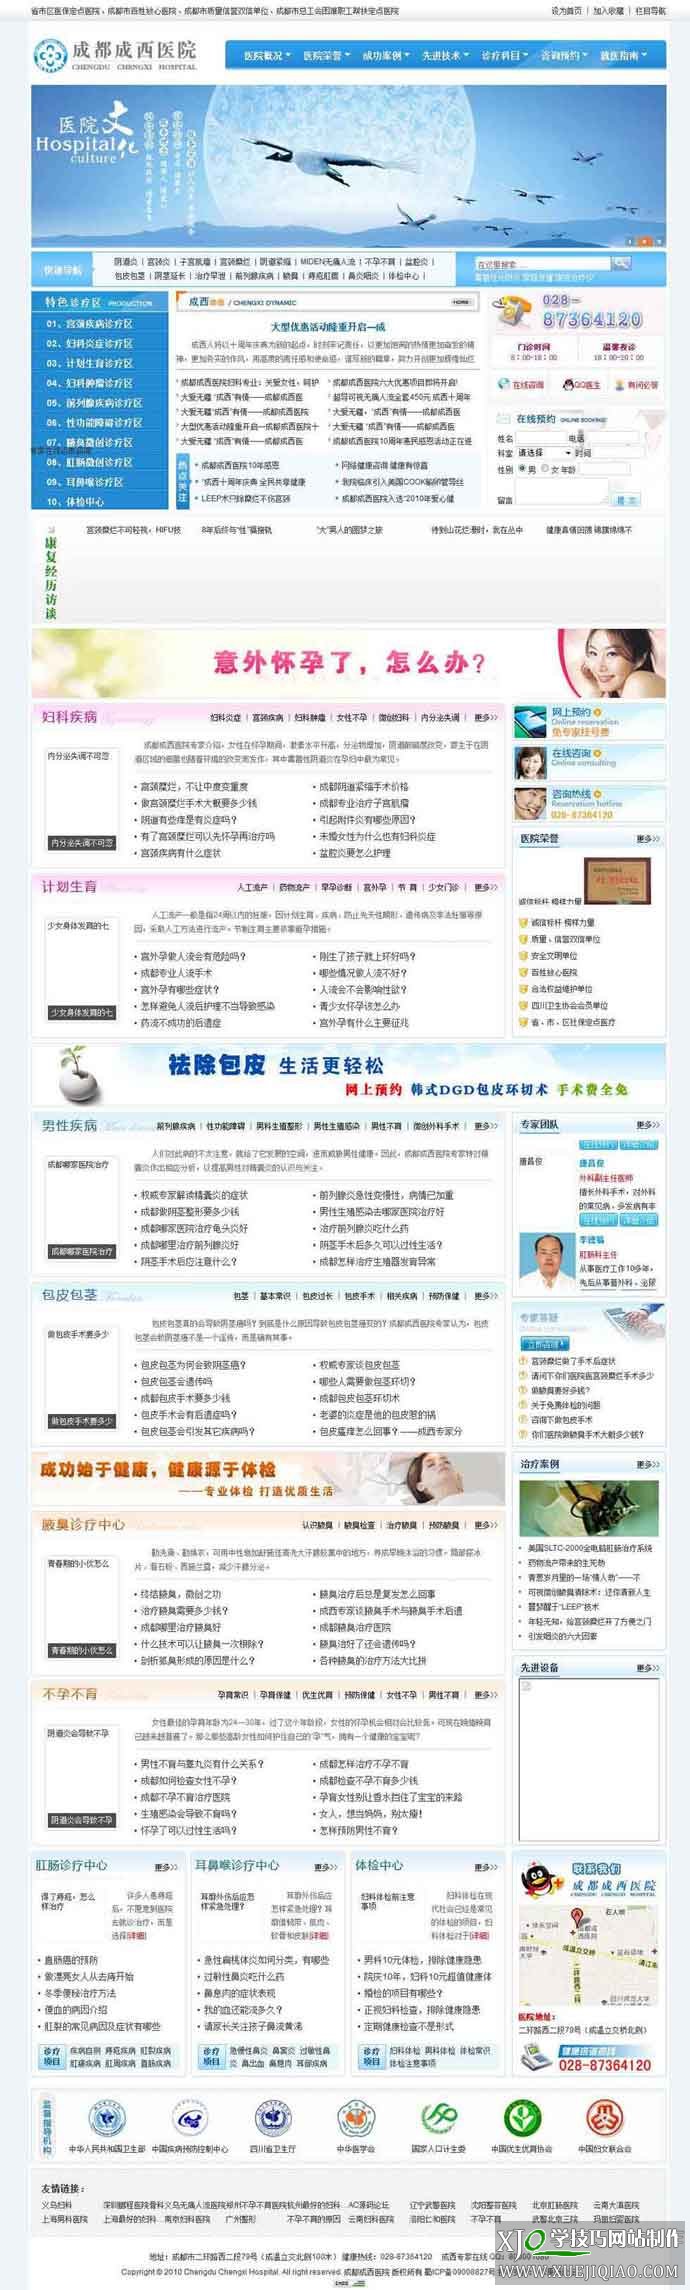 DeDeCMS蓝色综合性医院网站模板